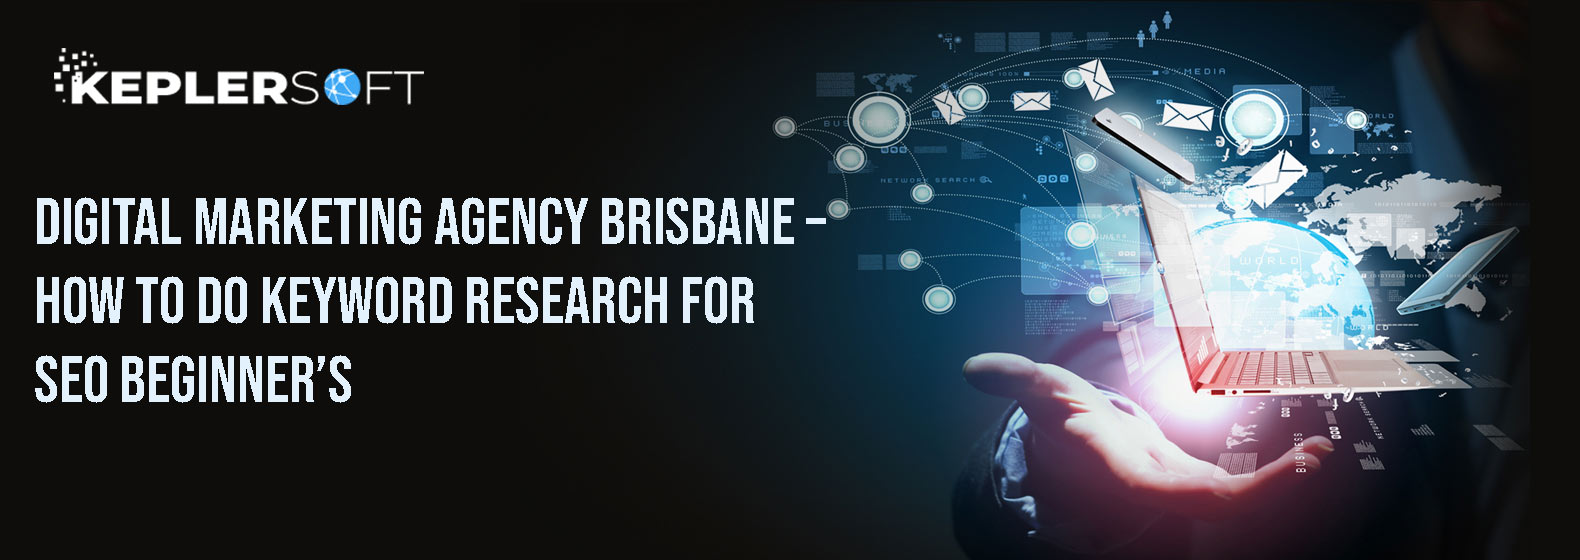 Digital Marketing Agency Brisbane – How to Do Keyword Research for SEO Beginner’s